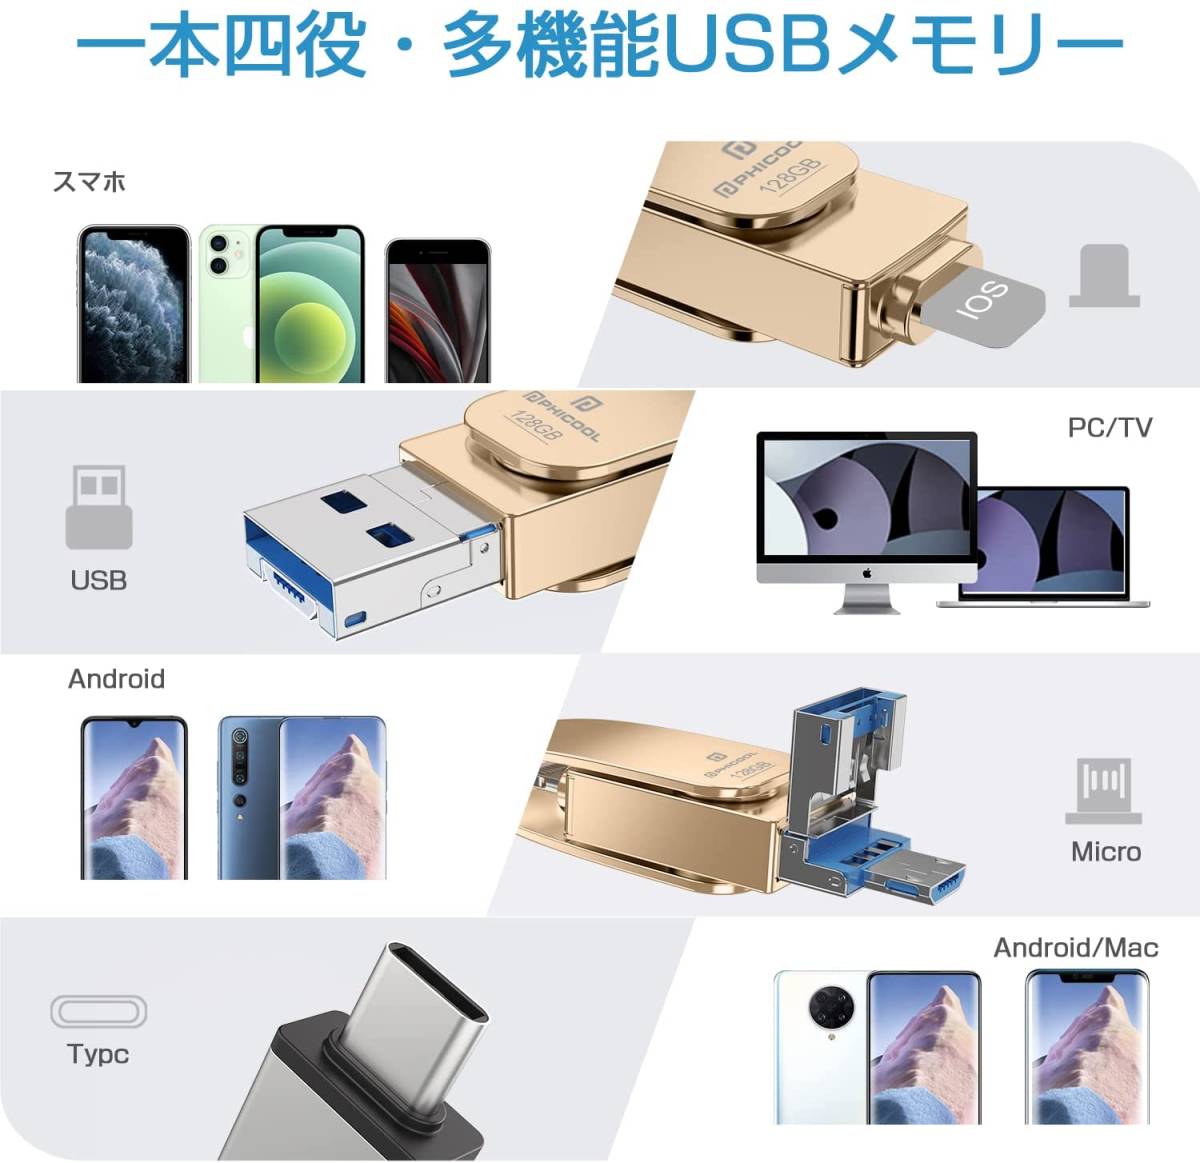 USBメモリ ４in1 高速 USB3.0 usb メモリー 128GB USB/Type-C/micro usb フラッシュドライブ パスワード保護 小型 回転式 亜鉛合金ボディ